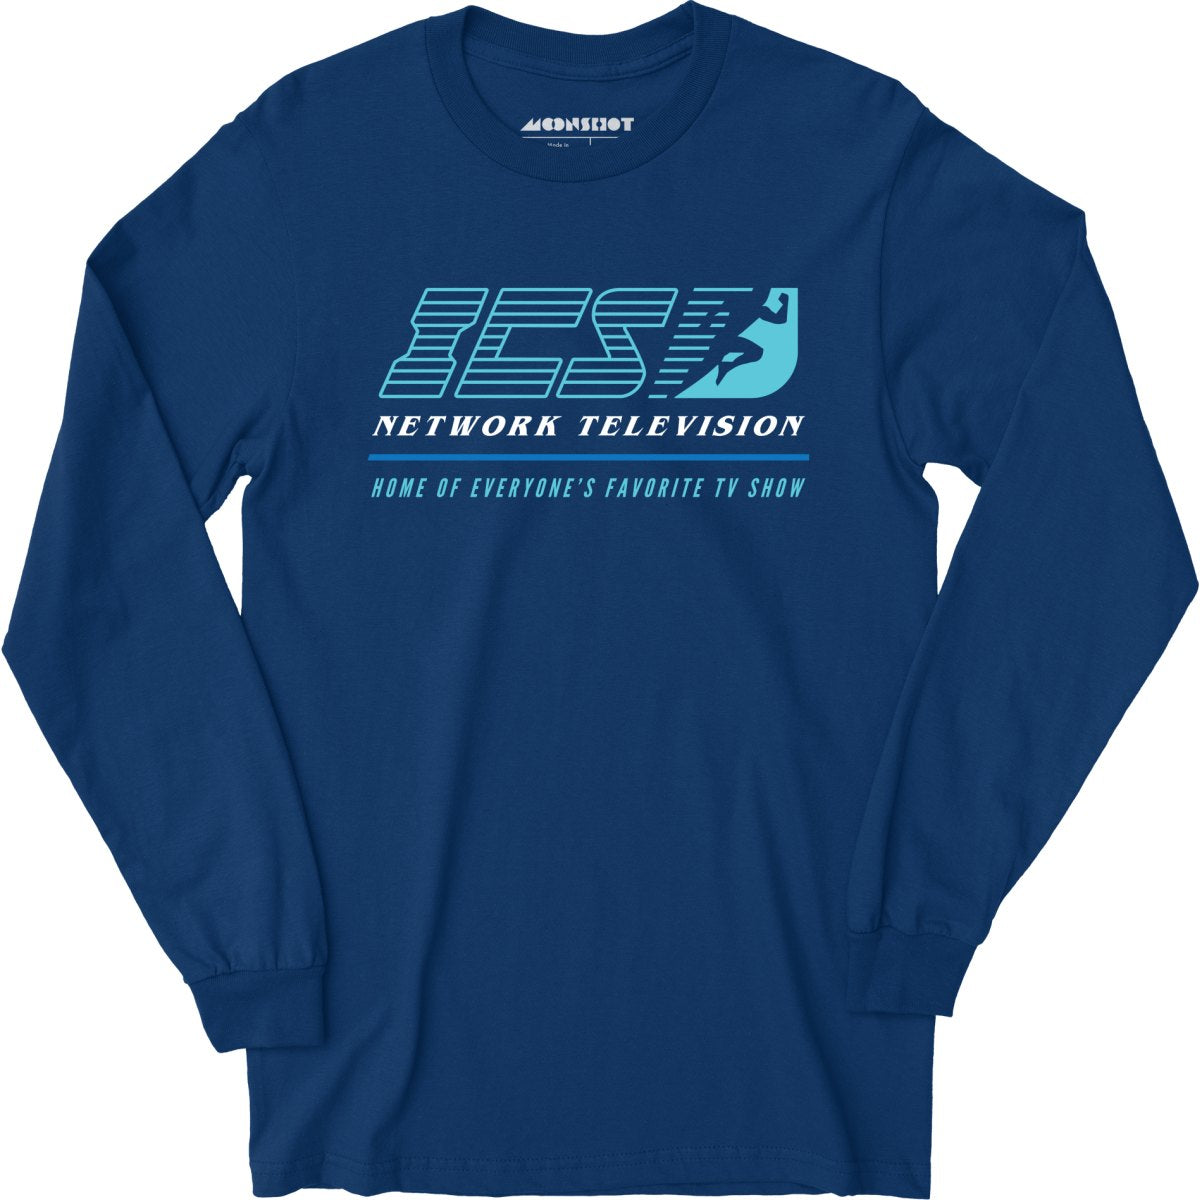 Running Man - ICS Network Television - Long Sleeve T-Shirt